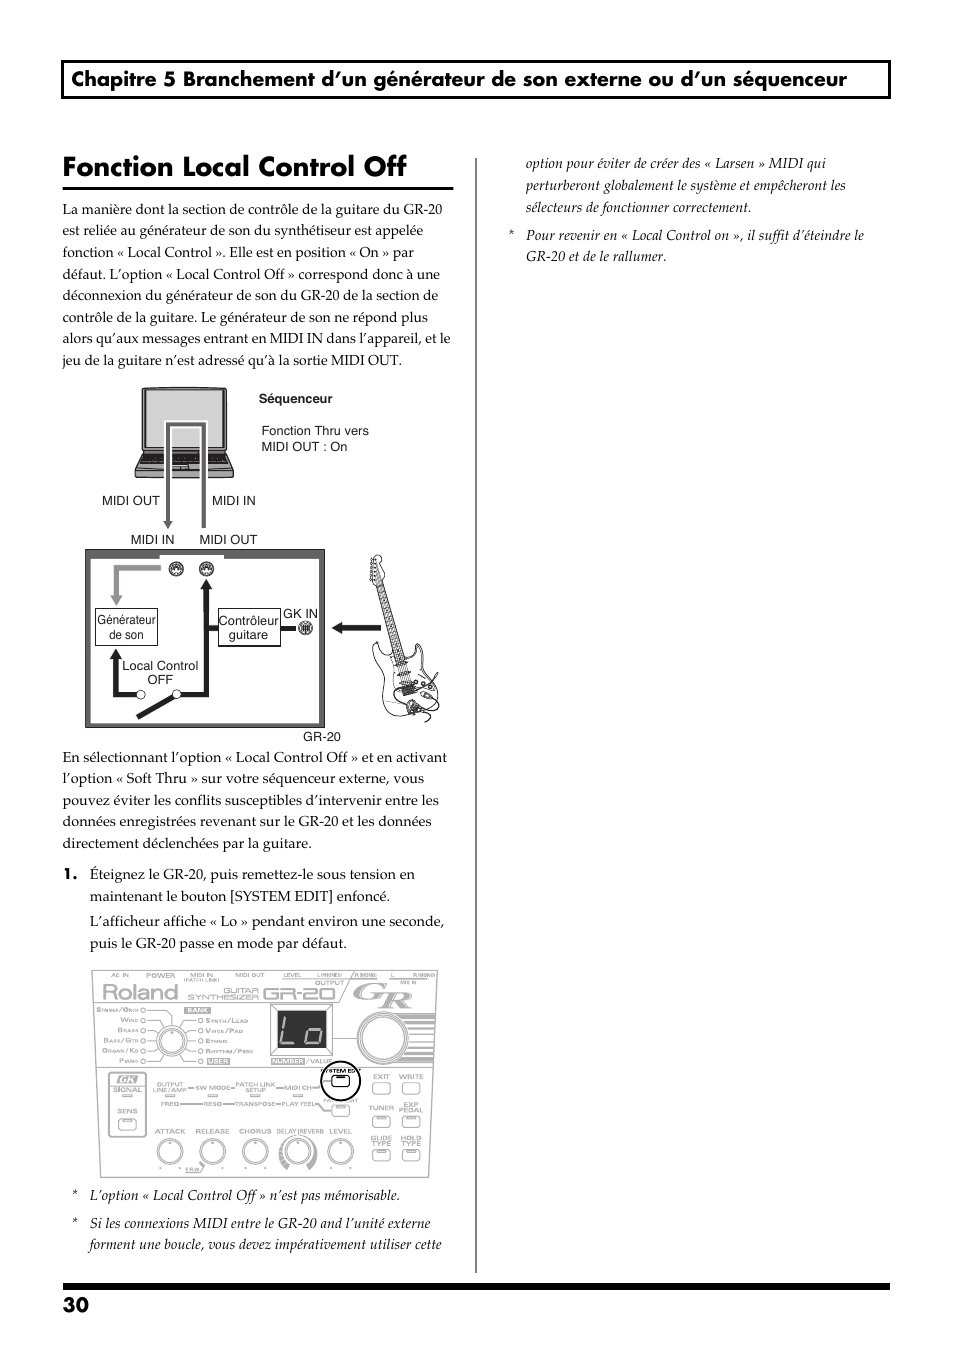 Fonction local control off | Roland GR-20 Manuel d'utilisation | Page 30 / 70